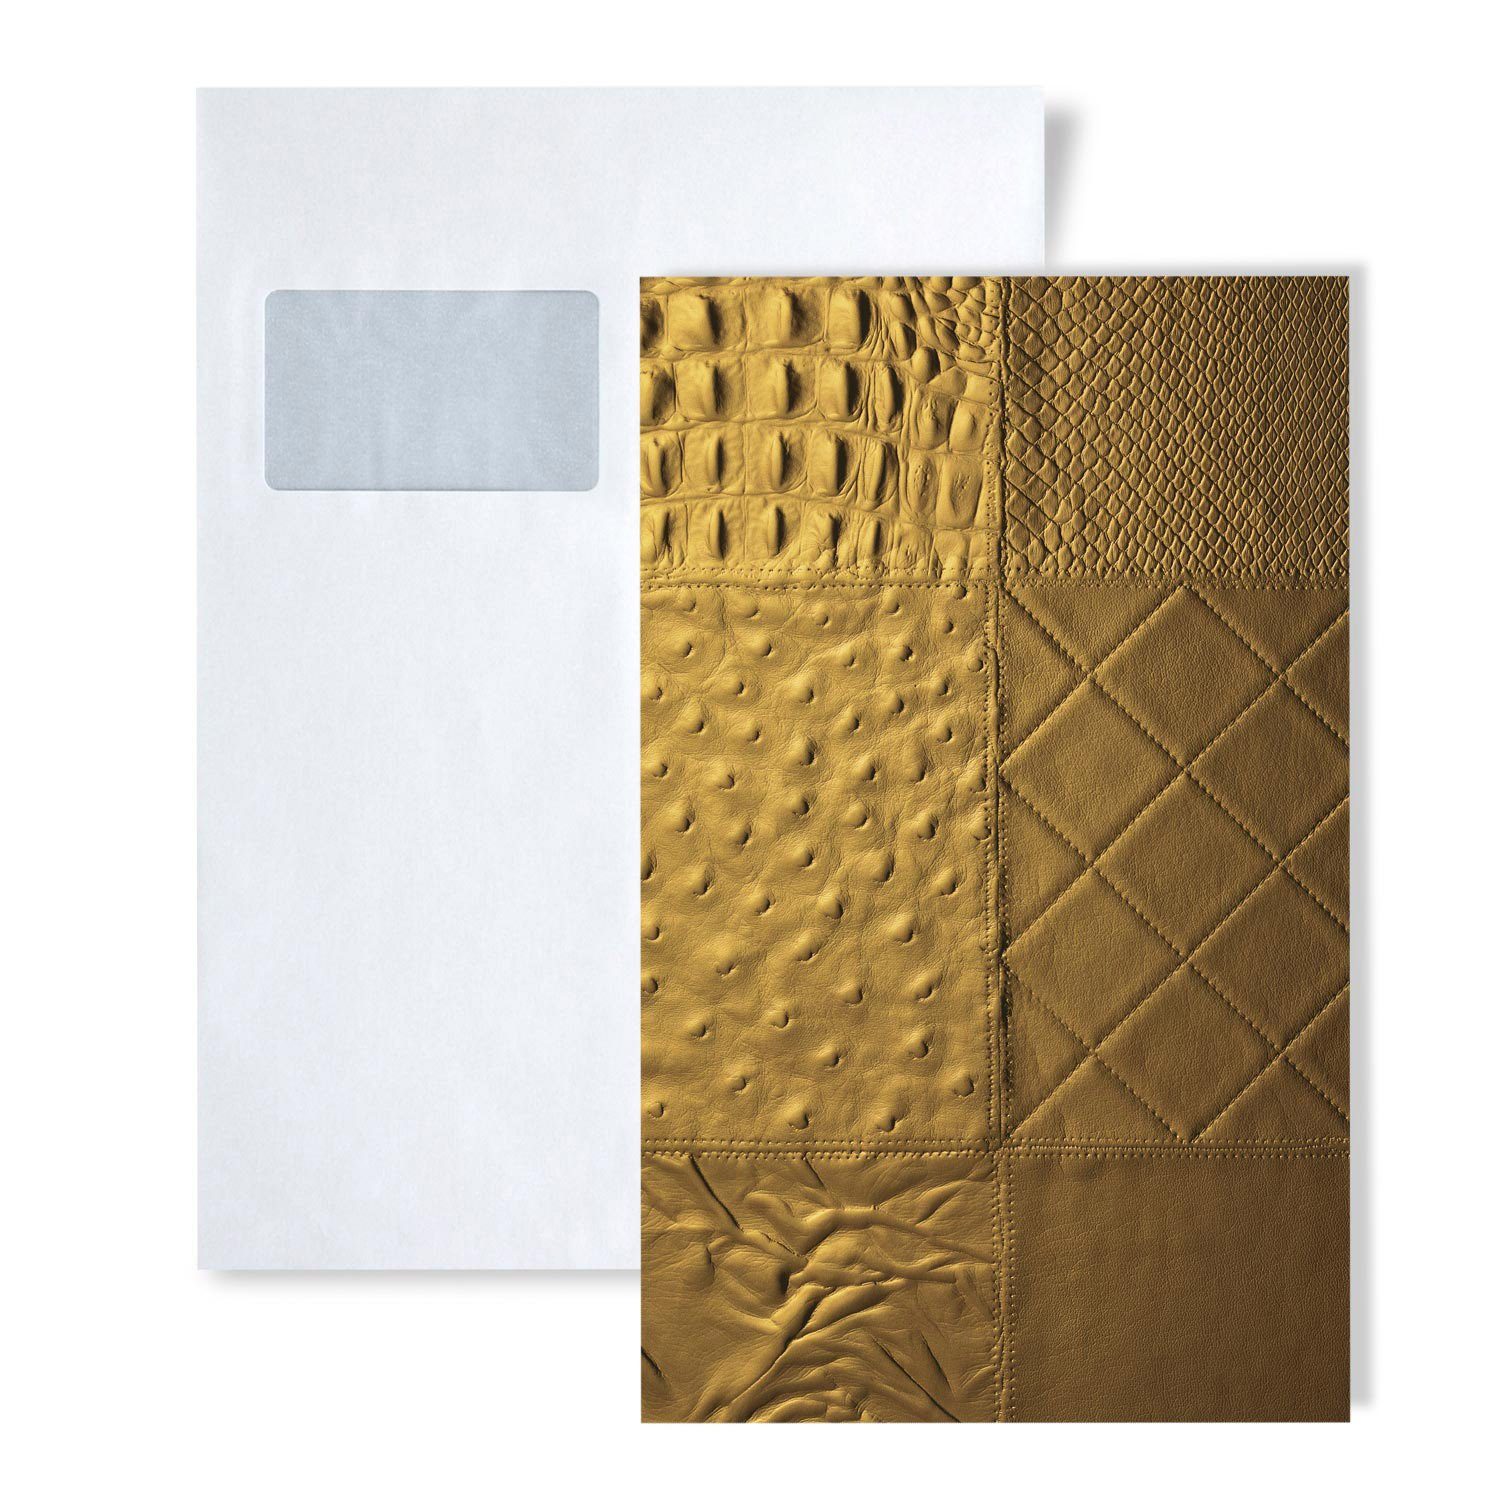 Wallface Wandpaneel S-13926-SA, BxL: 15x20 cm, (1 MUSTERSTÜCK, Produktmuster, 1-tlg., Muster des Wandpaneels) Gold, metallisch glänzend